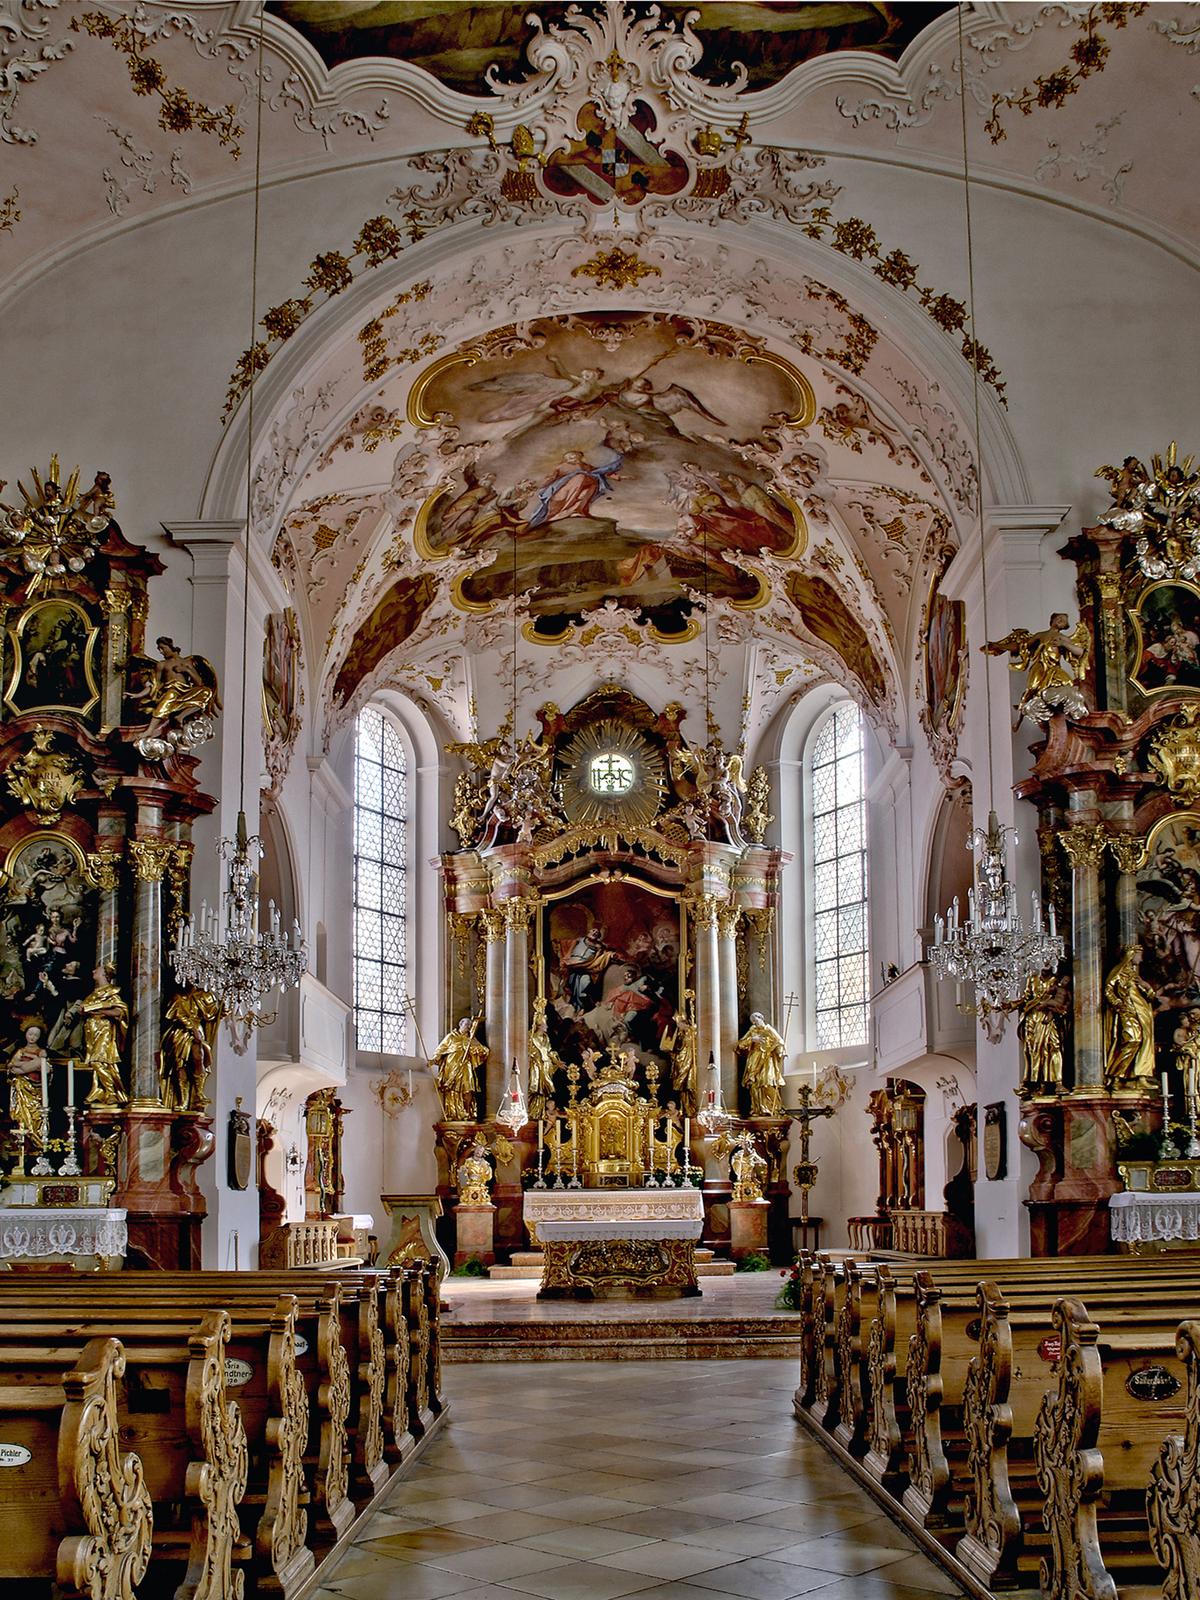  Inside the Parish Church of St. Peter and Paul in Mittenwald, Germany. (Courtesy of <a href="https://www.alpenwelt-karwendel.de/en/mittenwald-bavaria">Alpenwelt Karwendel</a>)